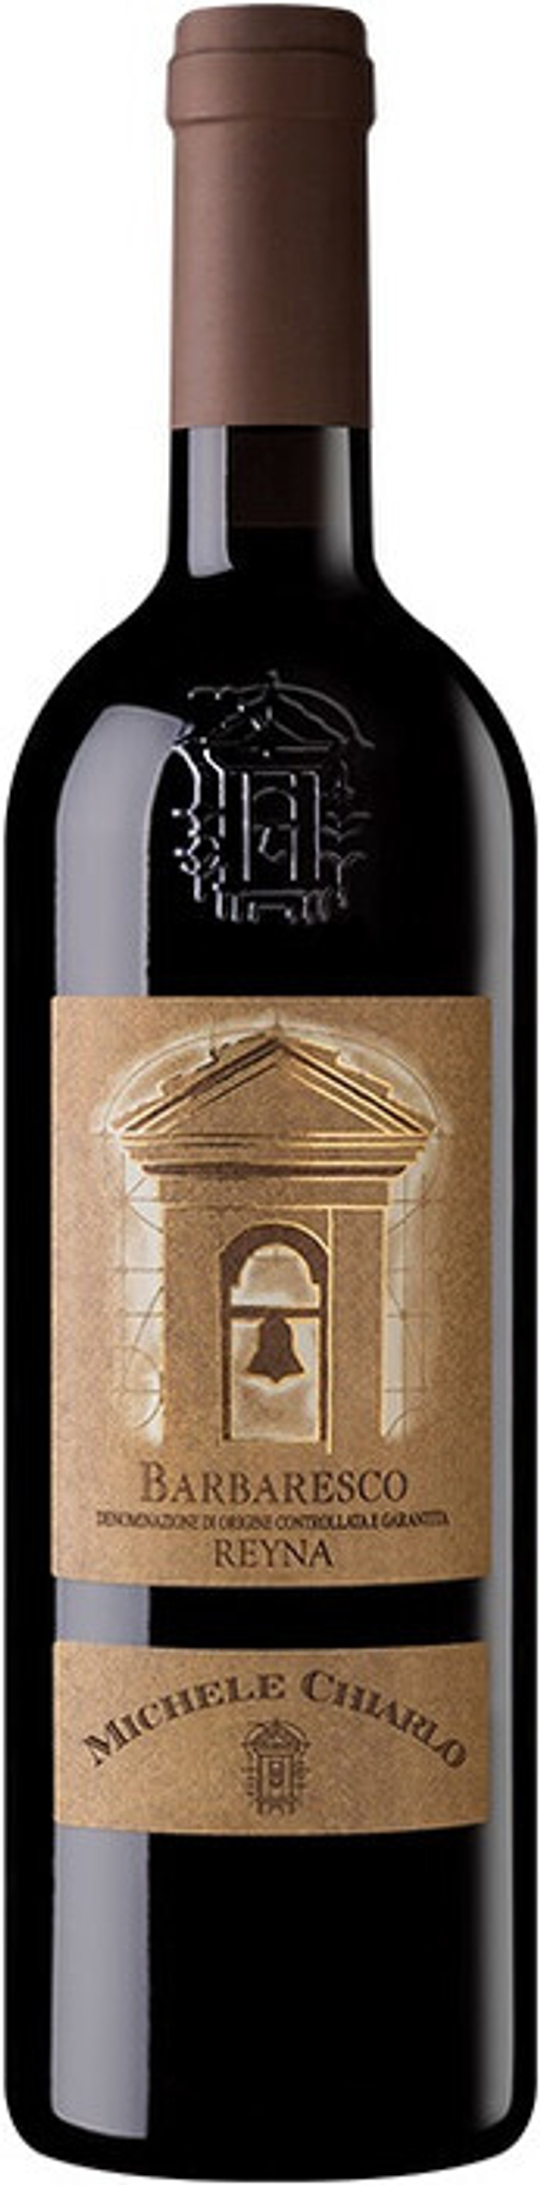 Вино Michele Chiarlo Barbaresco Reyna DOCG, 0,75 л.